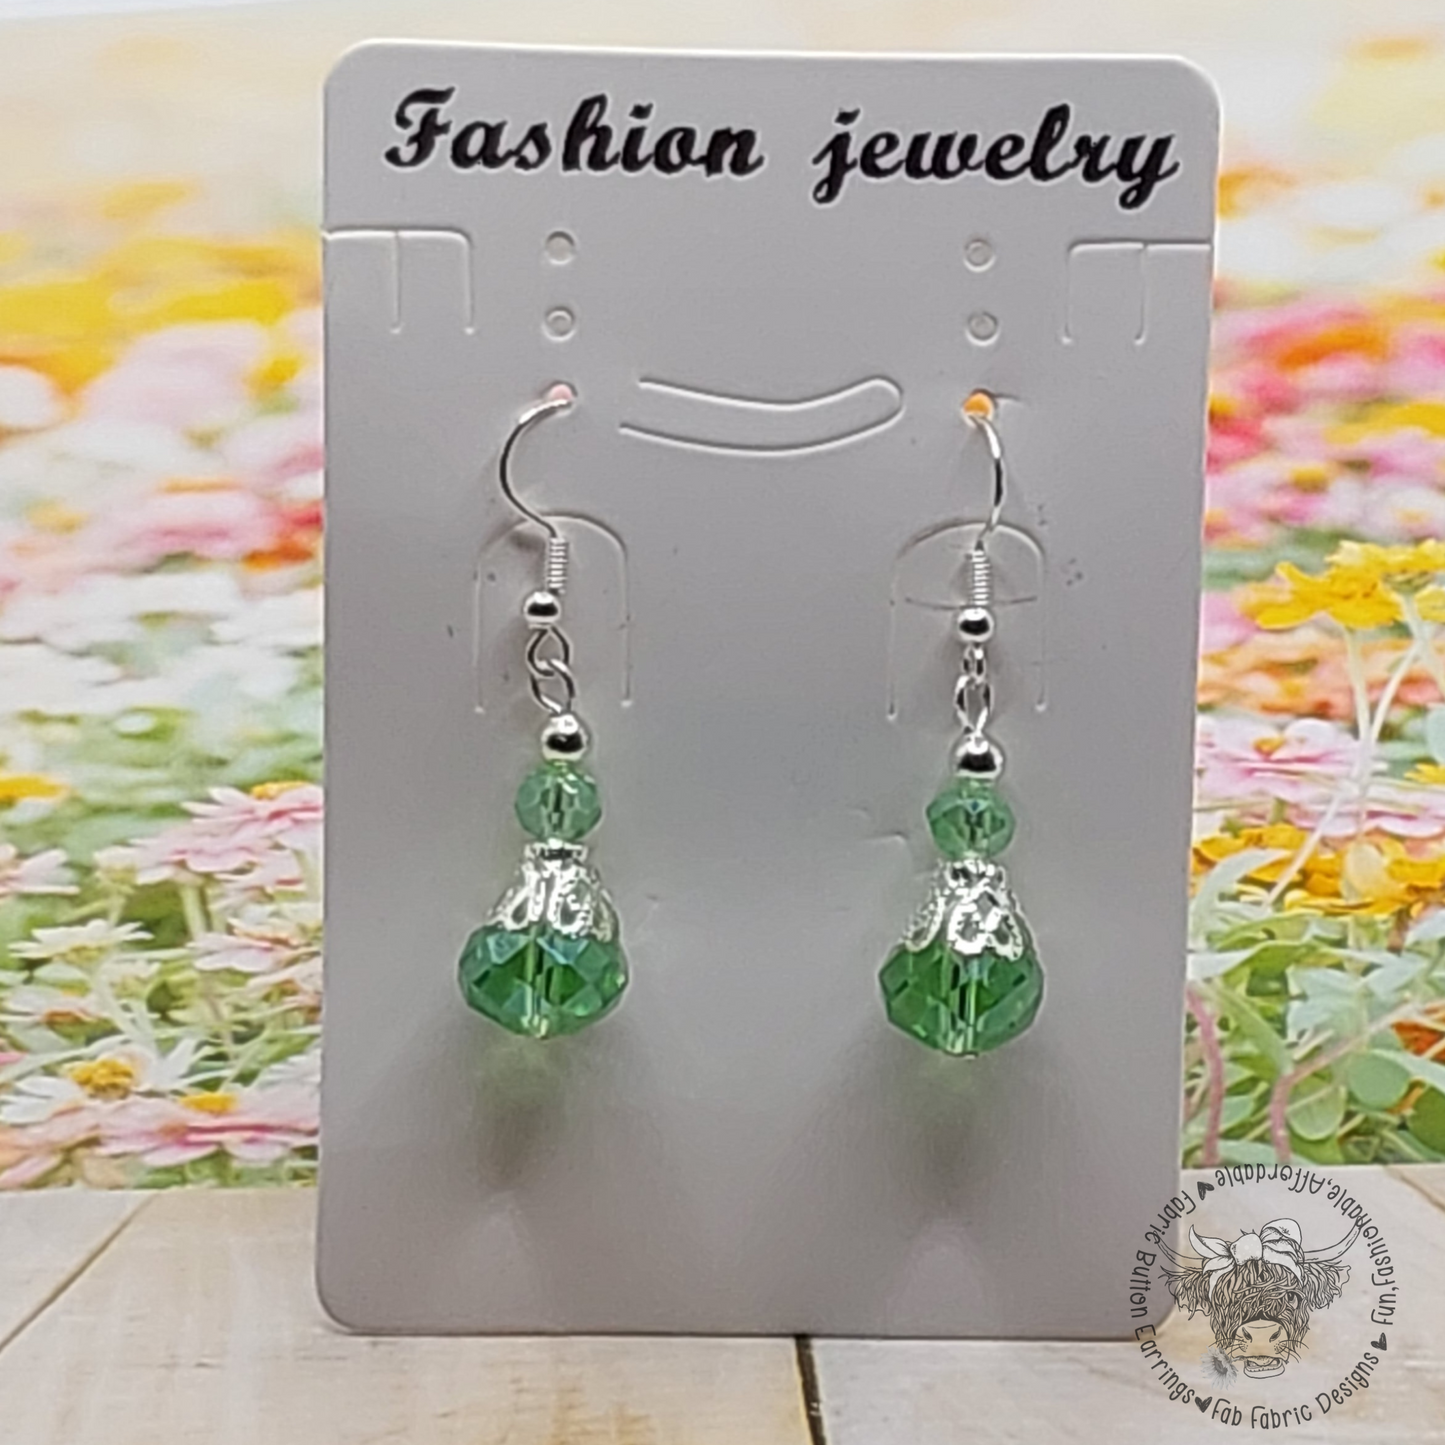 Green Glass Bead Dangle Earrings